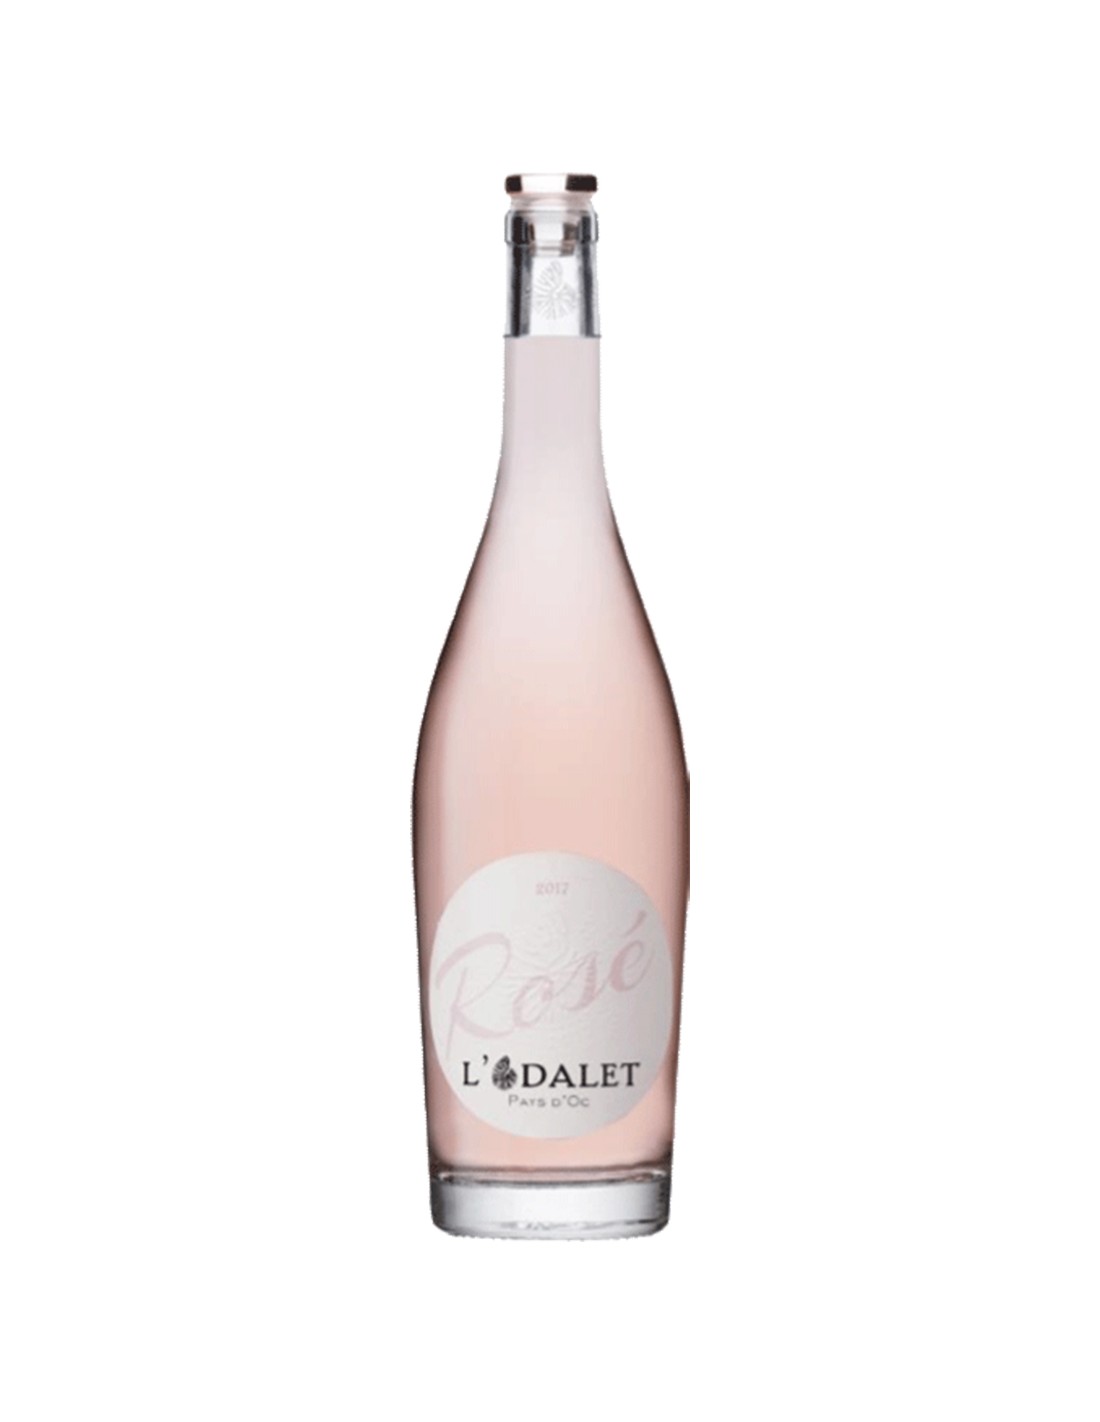 Vin roze sec, Le Rose de L’Odalet Pays D’Oc IGP, 12.5% alc., 0.75L, Franta alcooldiscount.ro